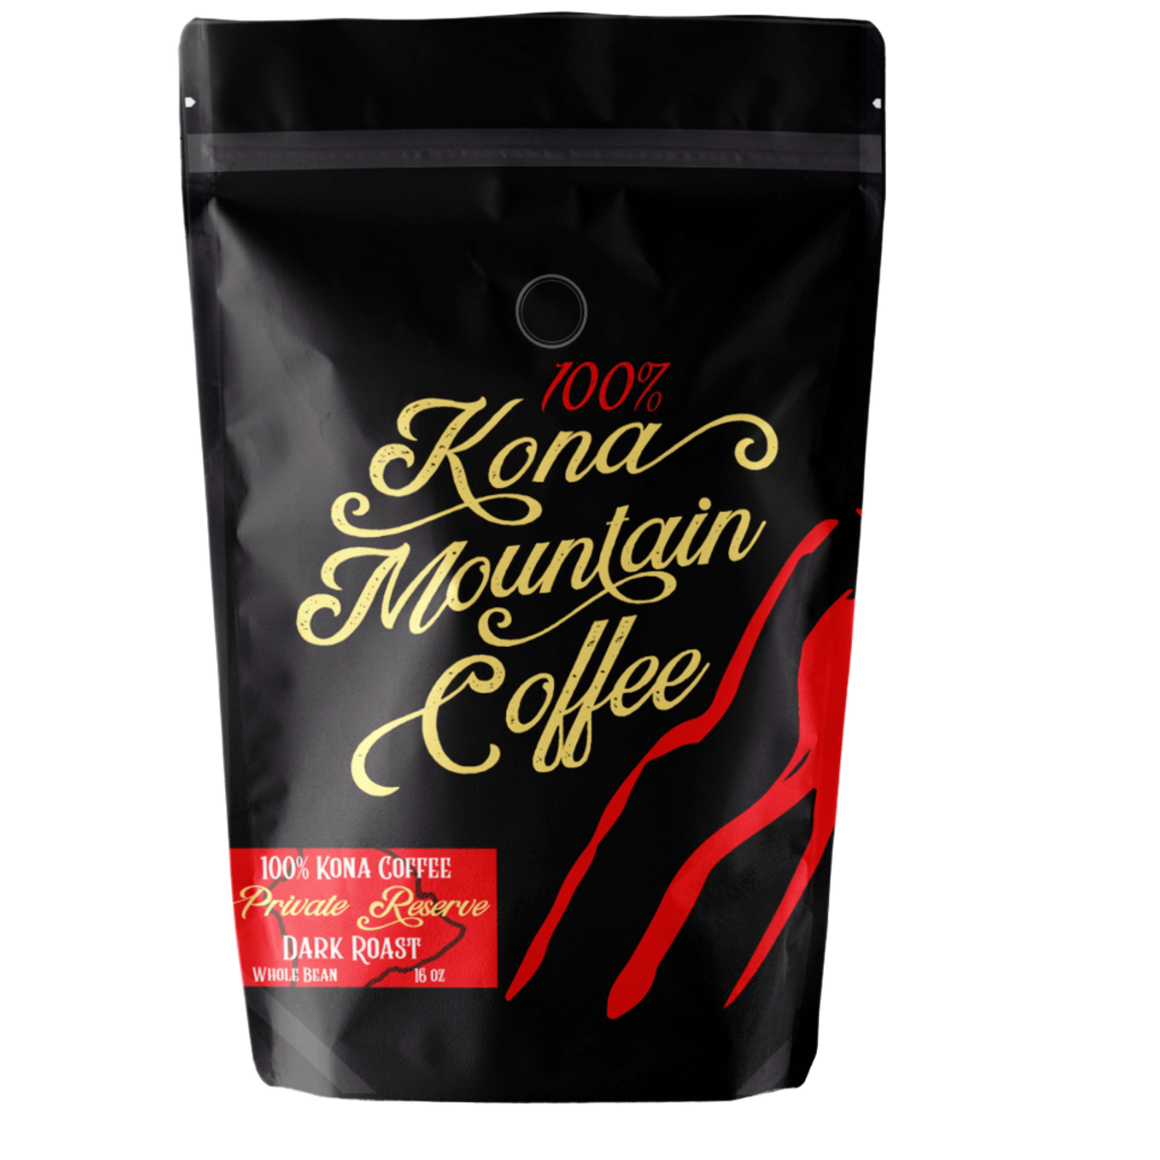 100% Kona Coffee Private Reserve Dark Roast - Kona Mountain Coffee